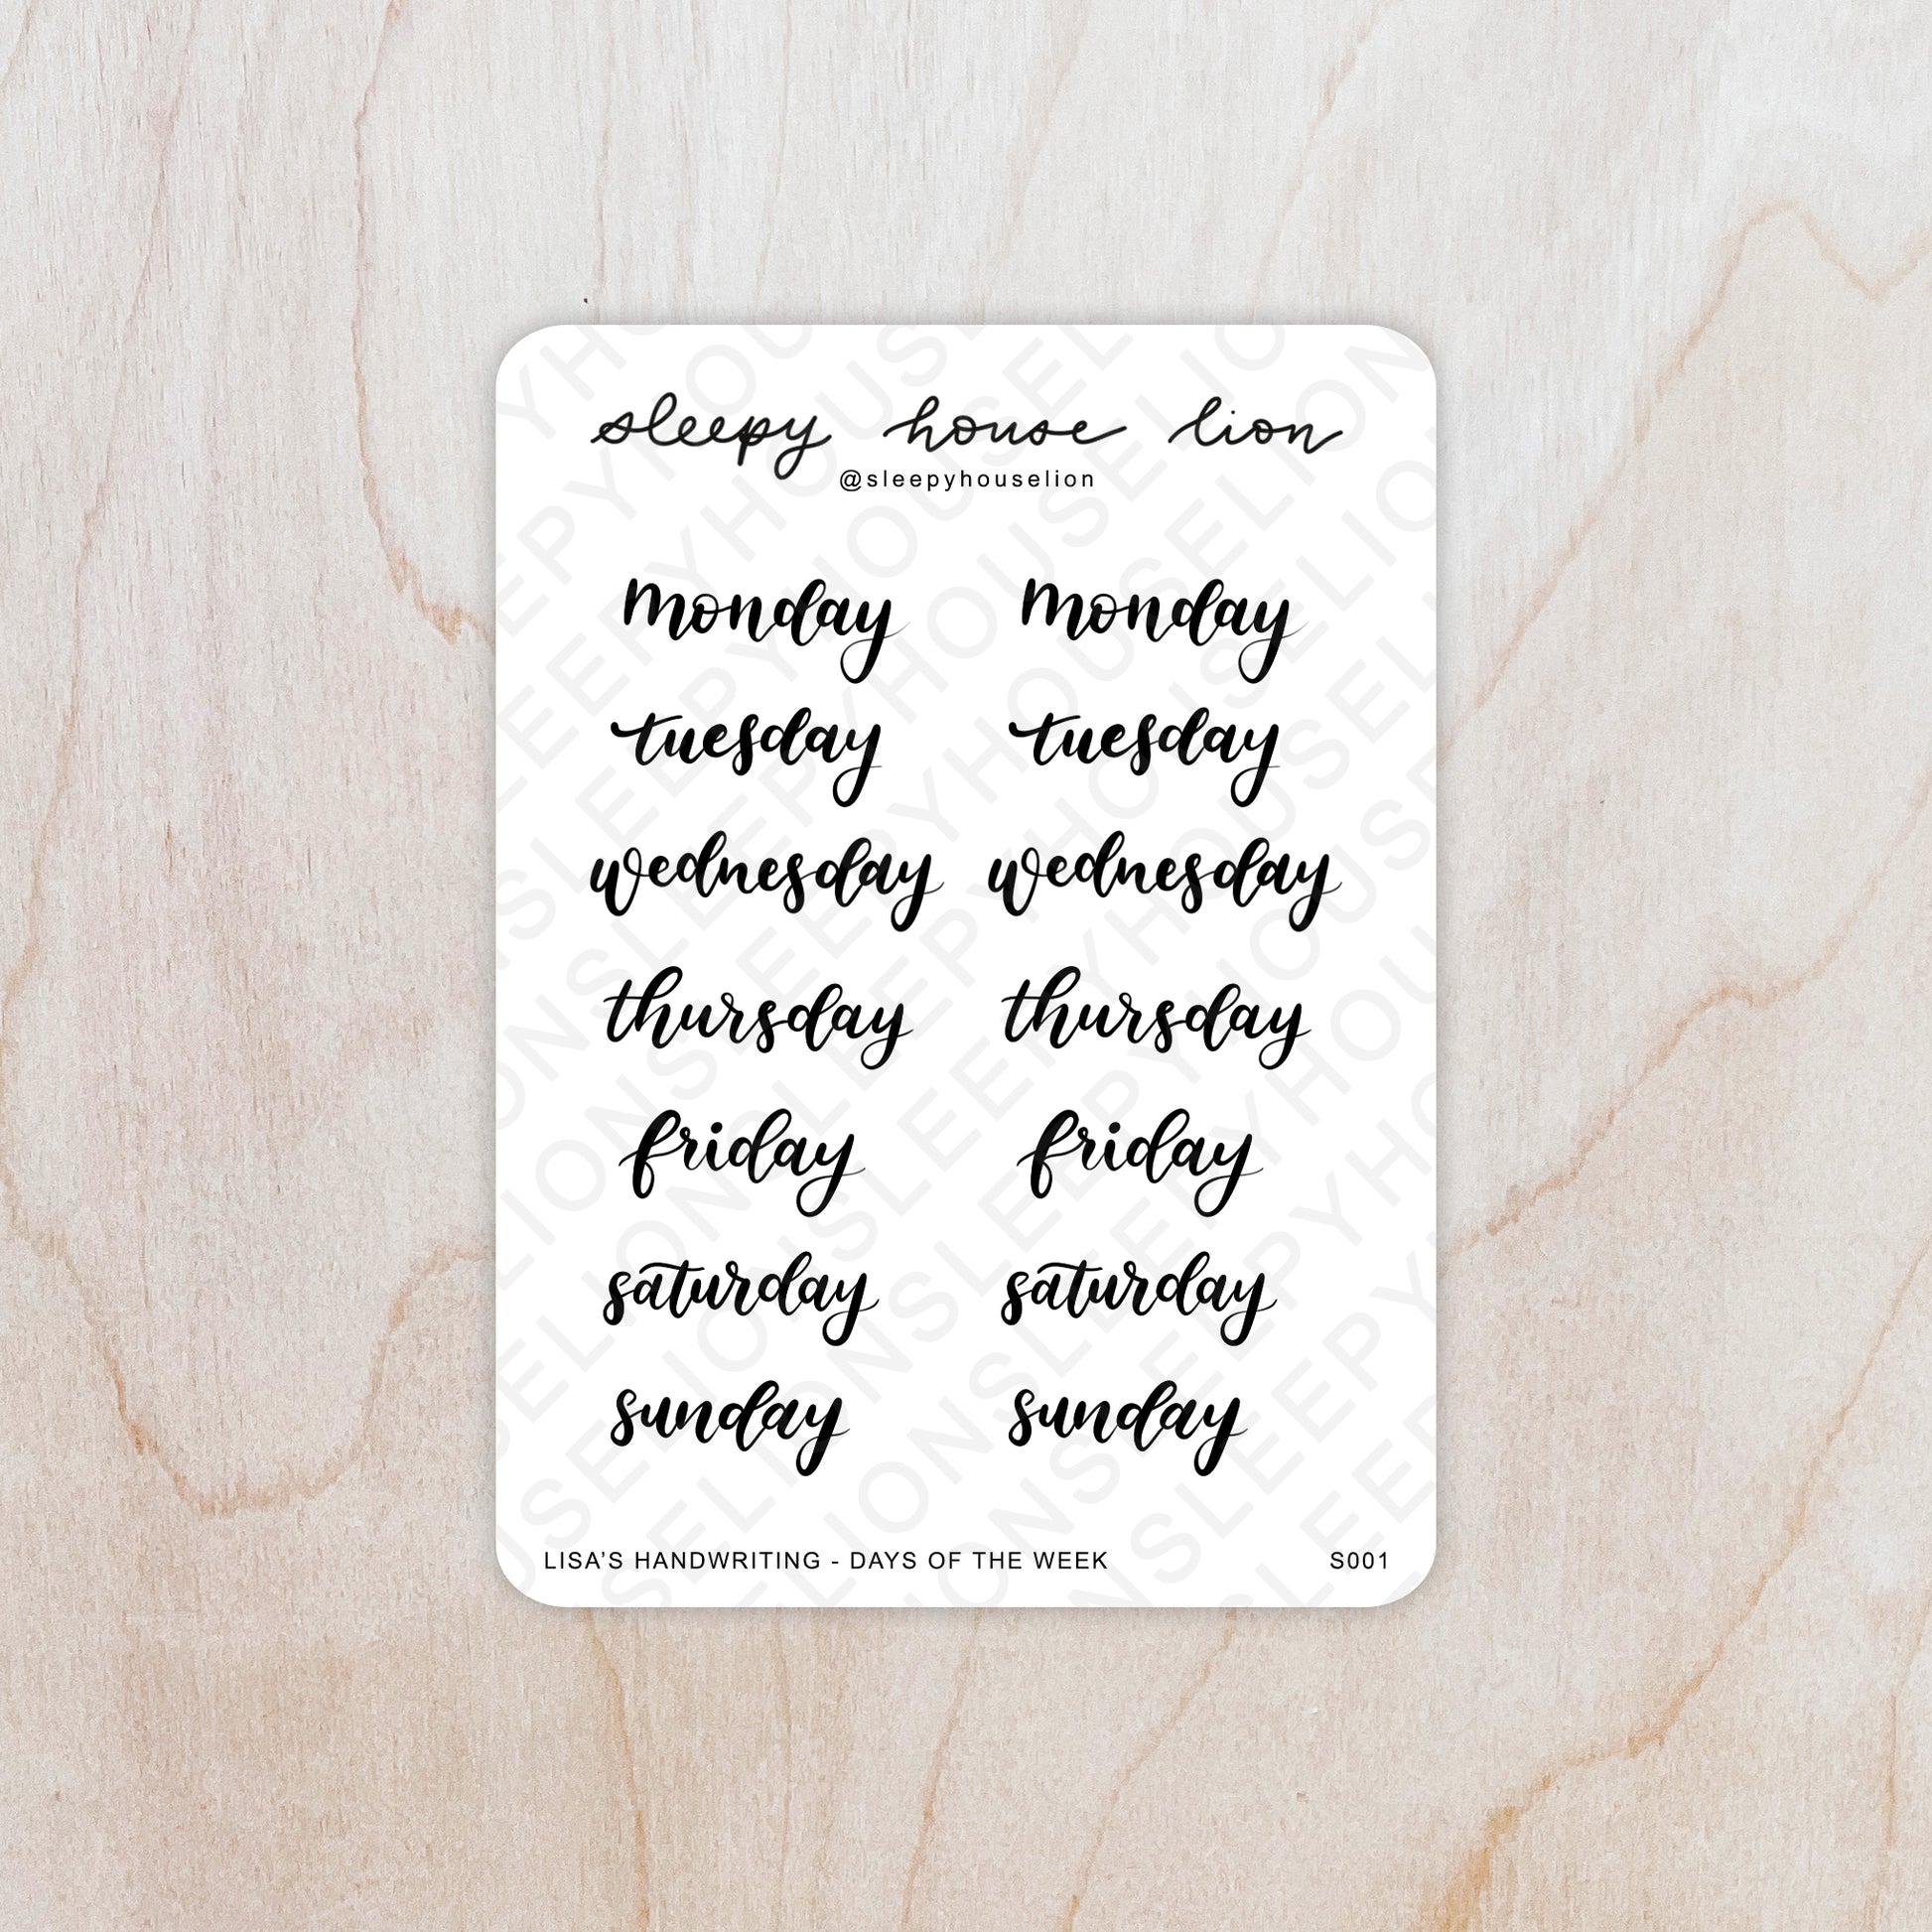 Days of the Week Sticker Sheet - Cursive